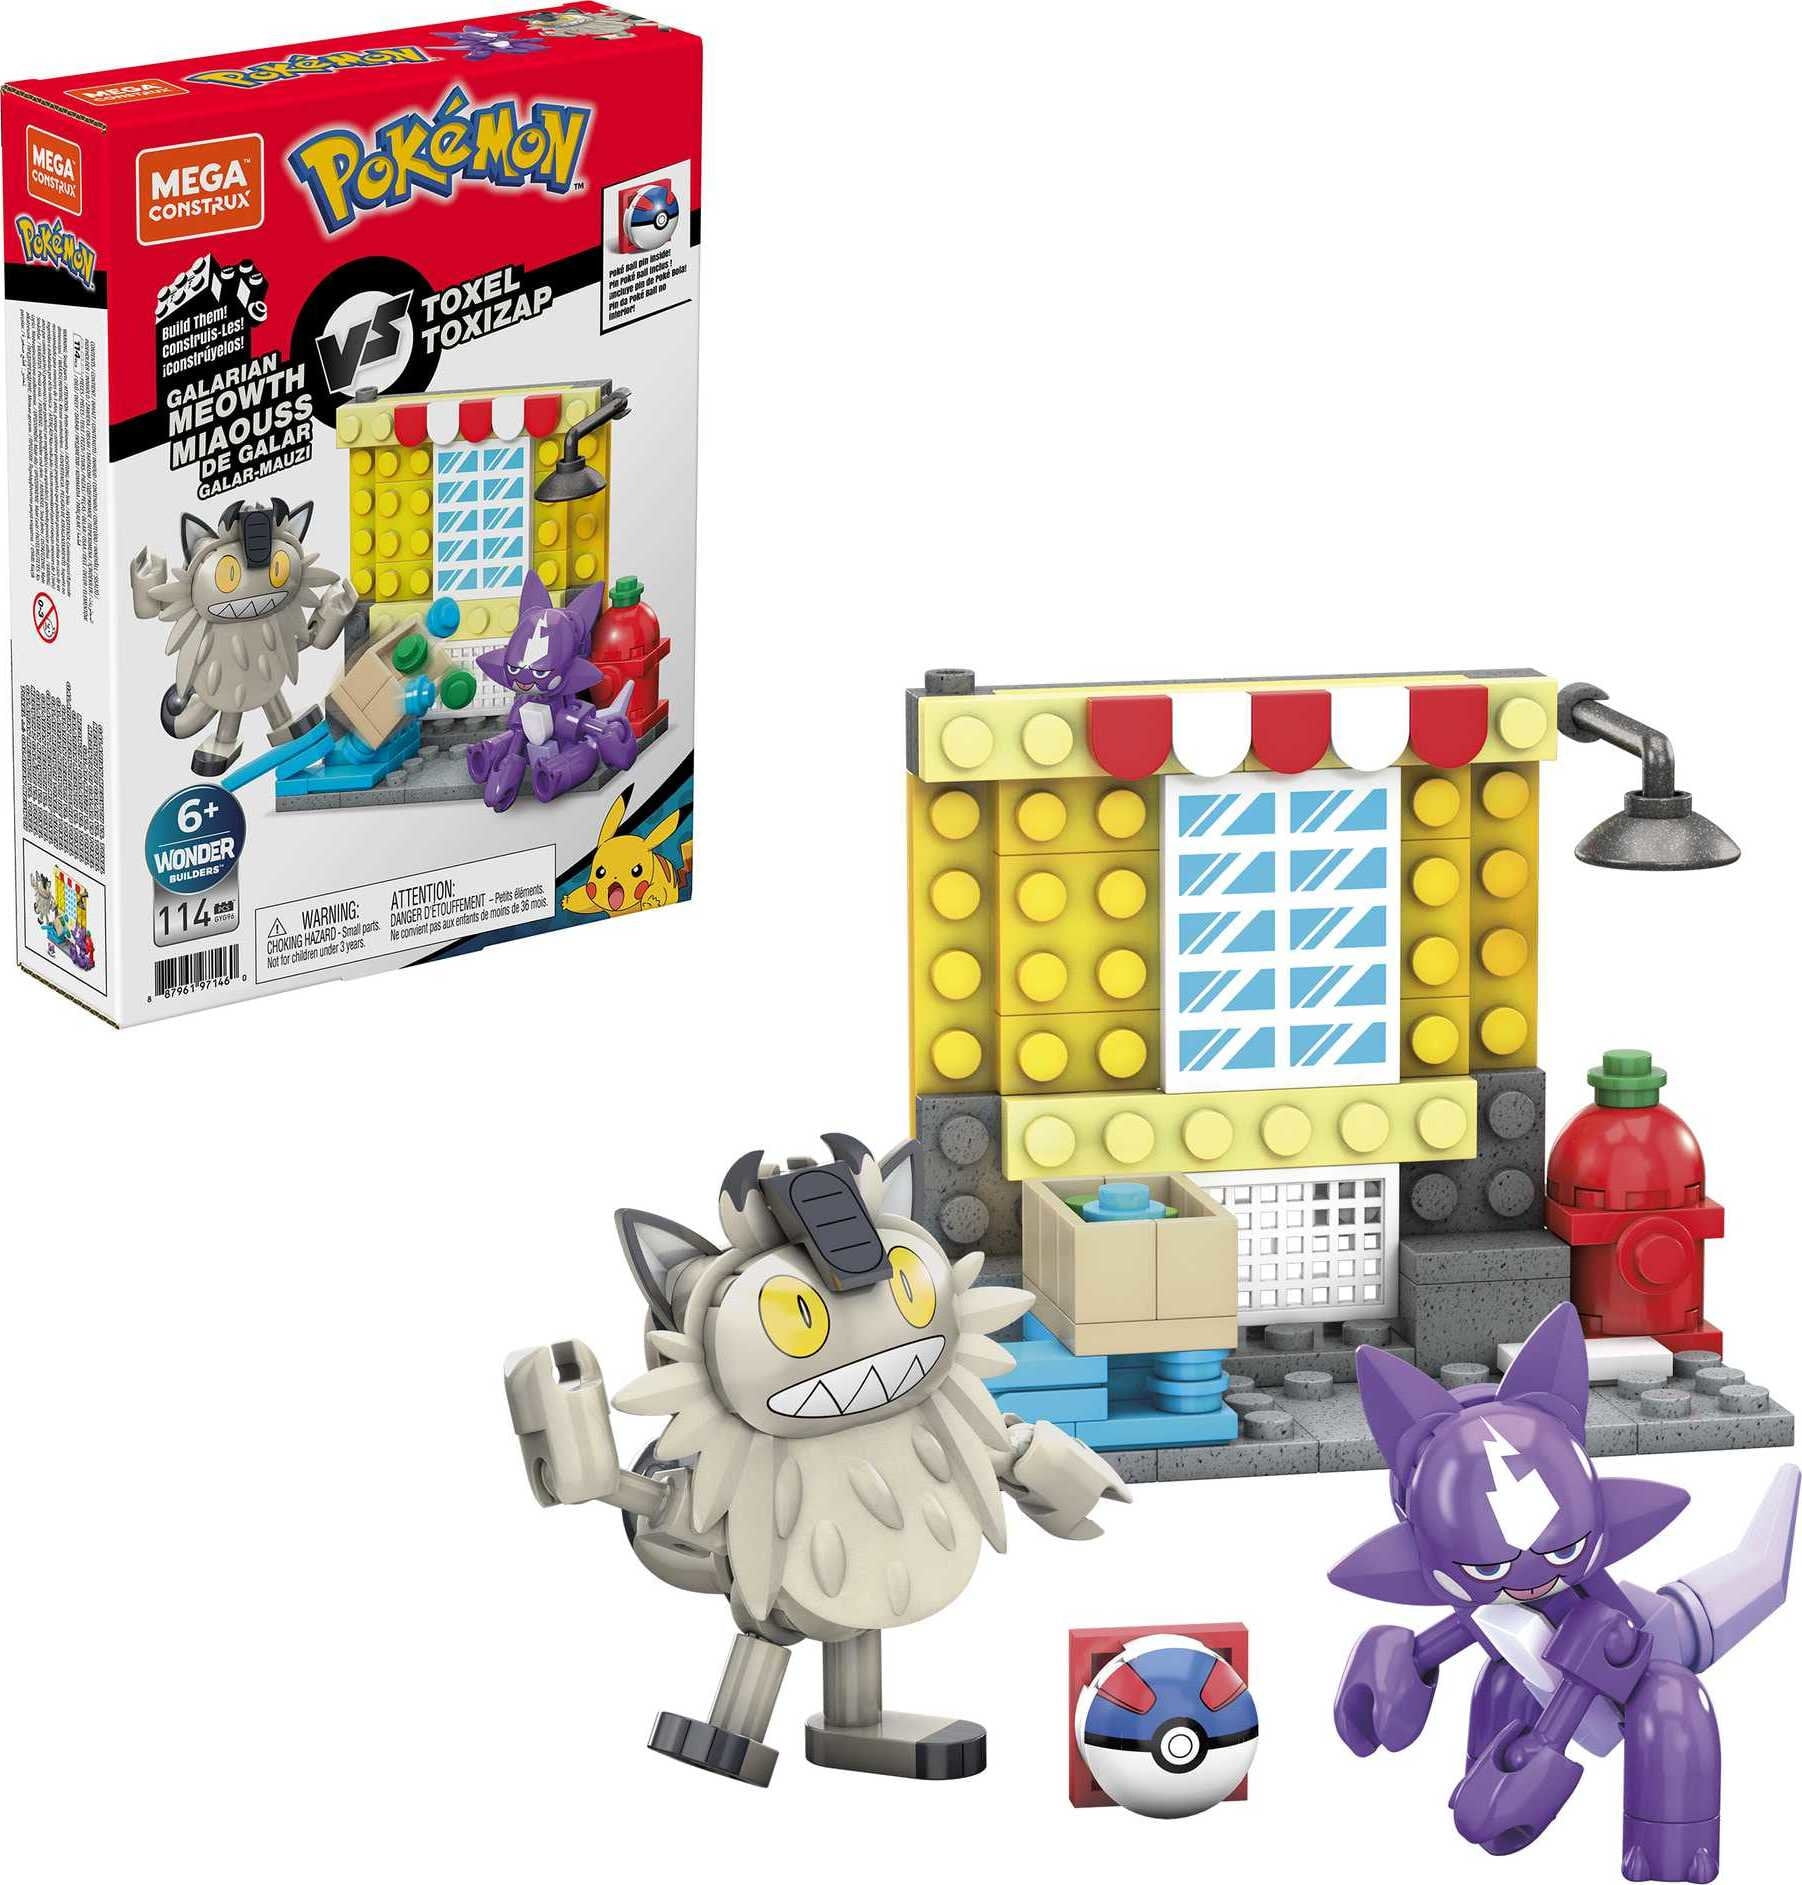 Details about   Pokemon pokeball whole set nanoblocks lego 4349pcs building blocks AU gift Kids 